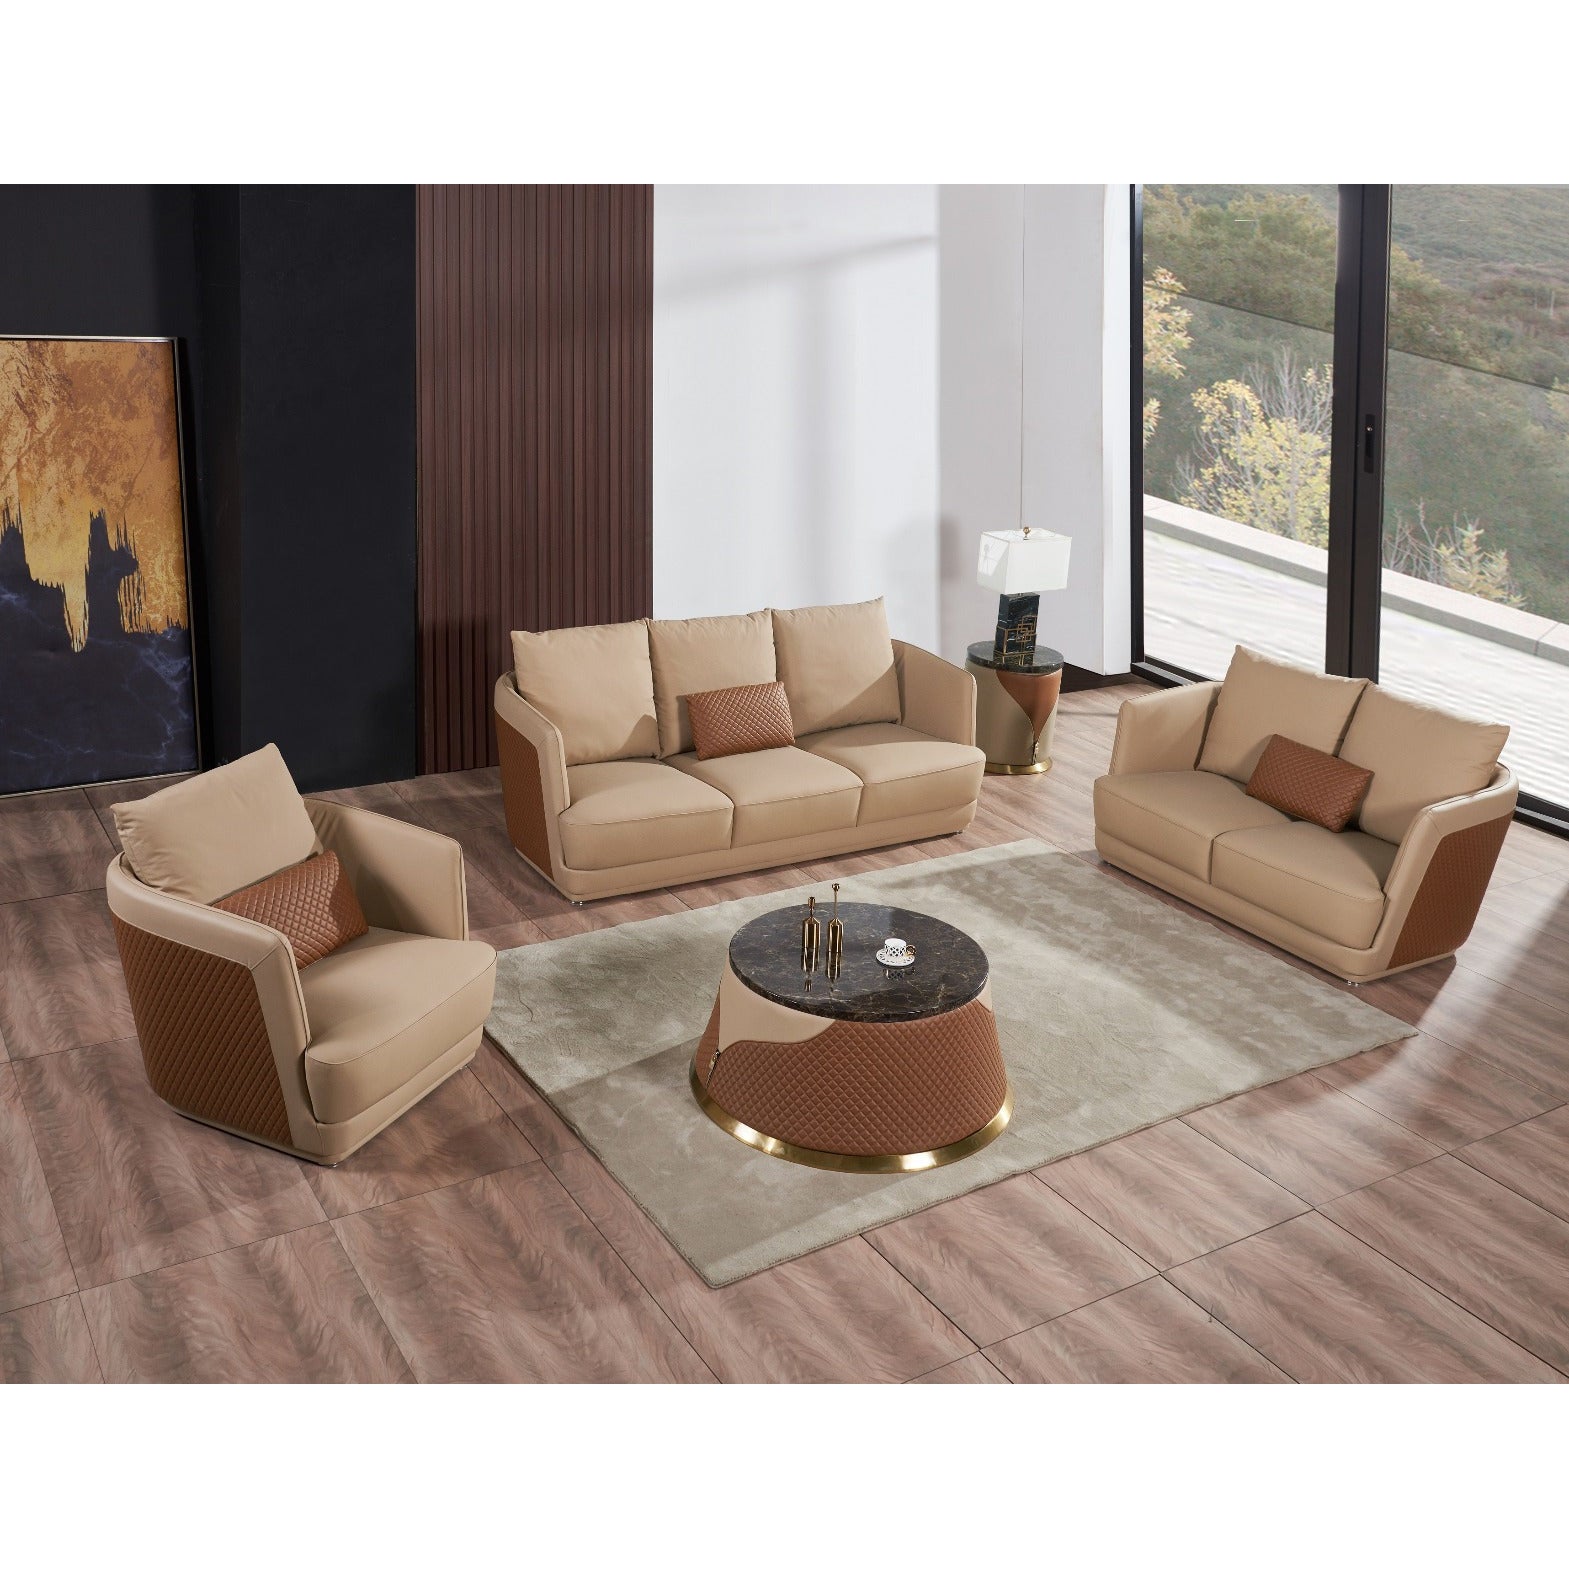 European Furniture - Glamour Loveseat in Tan-Brown - 51617-L - New Star Living